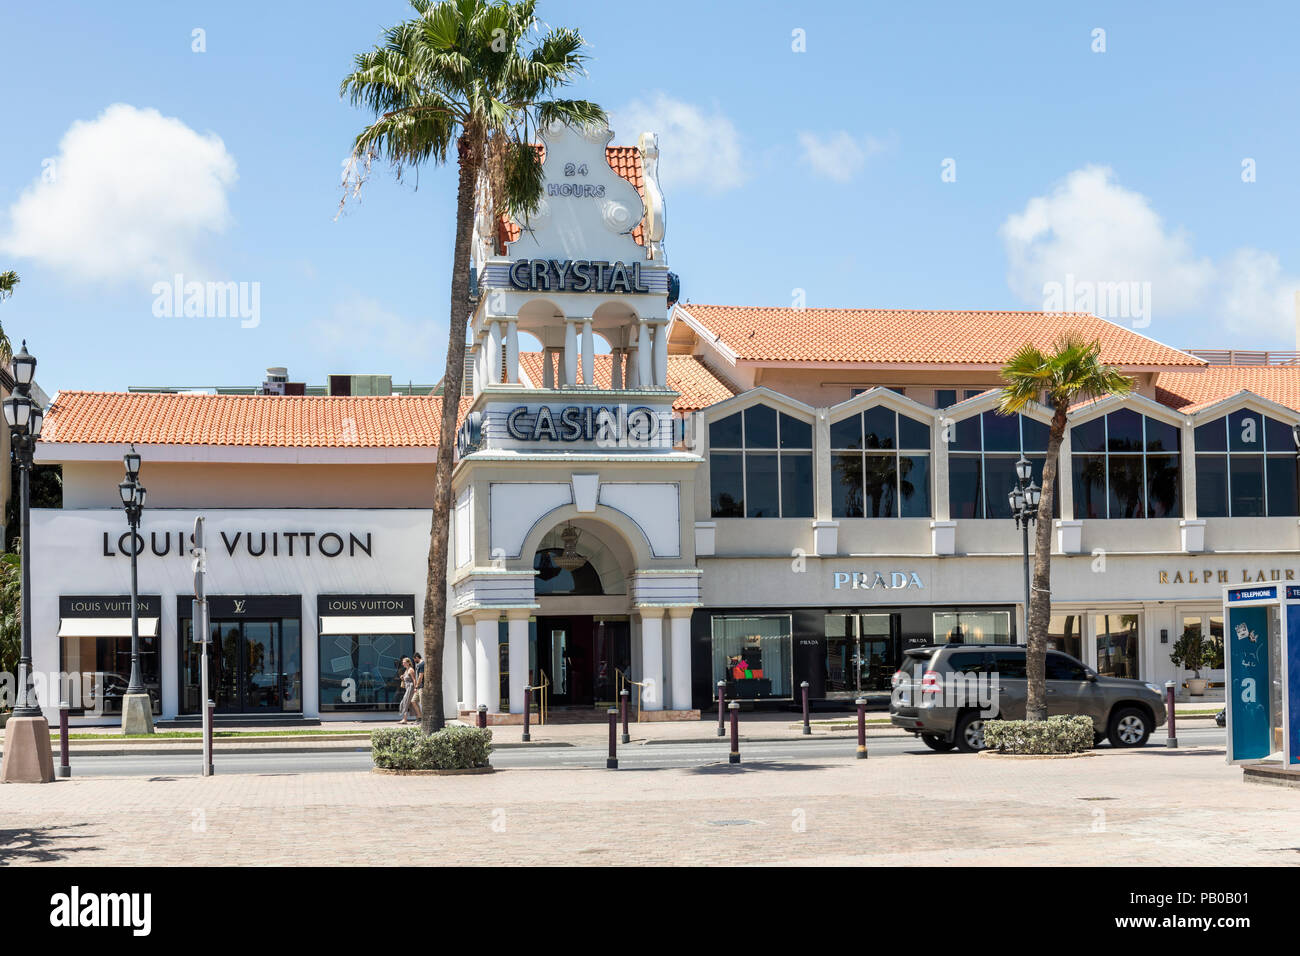 Renaissance Mall / Crystal Casino, Oranjestad, Aruba, dei Caraibi Foto Stock